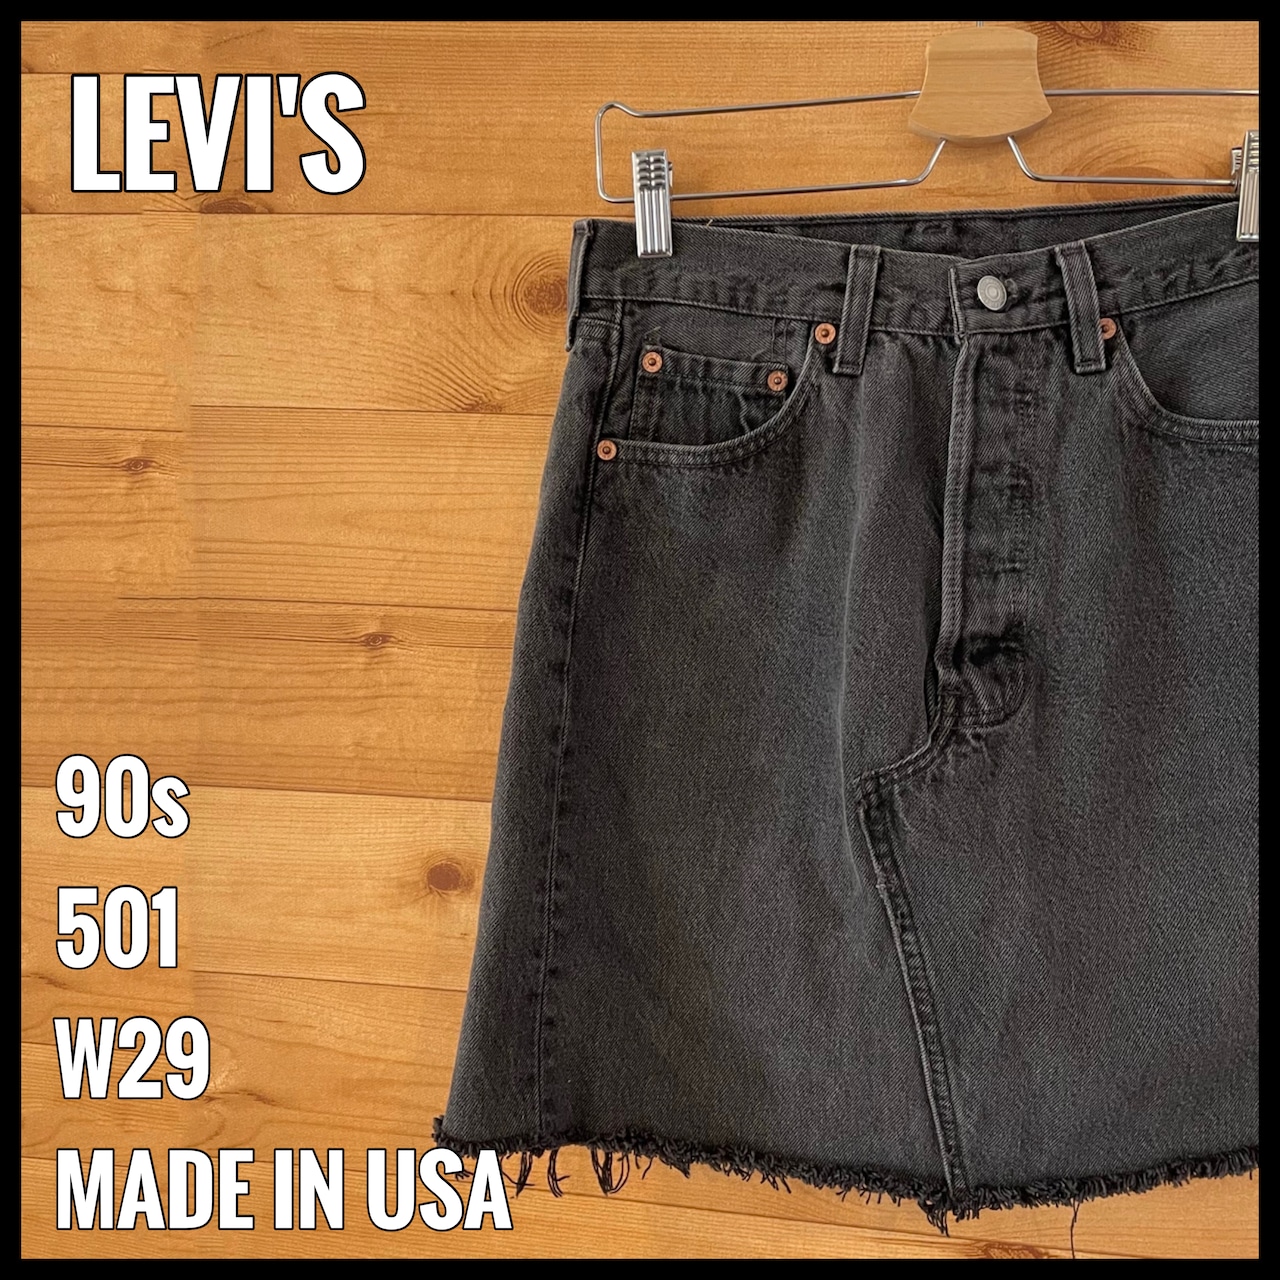 【LEVI'S】90s USA製 501 ブラックデニム スカート ボタン裏刻印522 ブランクタブ W29 リーバイス ビンテージ US古着 アメリカ古着